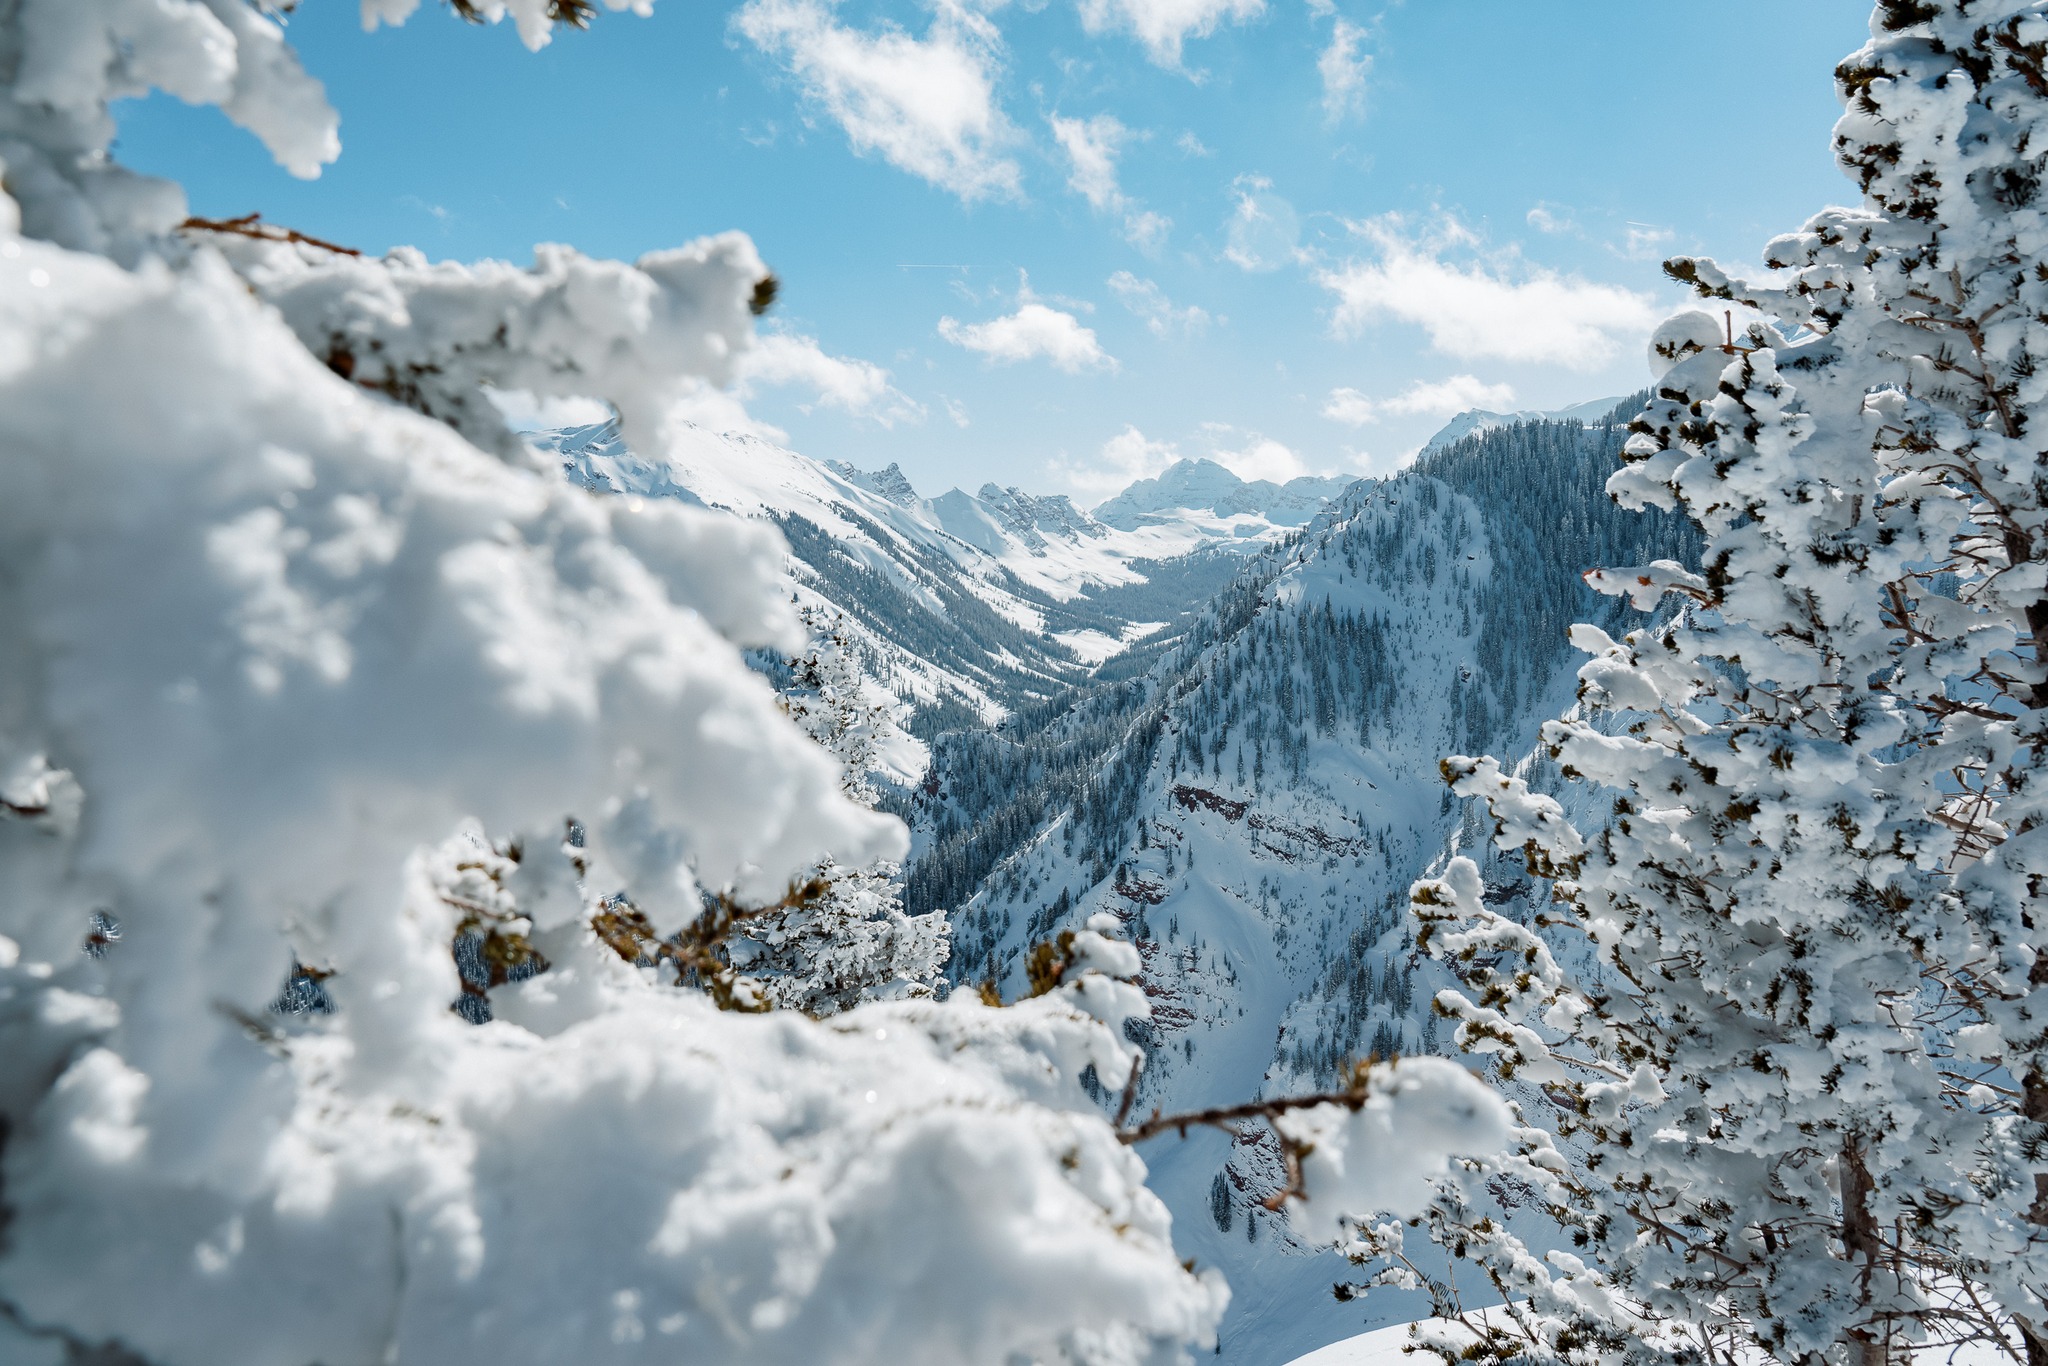 Aspen Snowmass Colorado USA